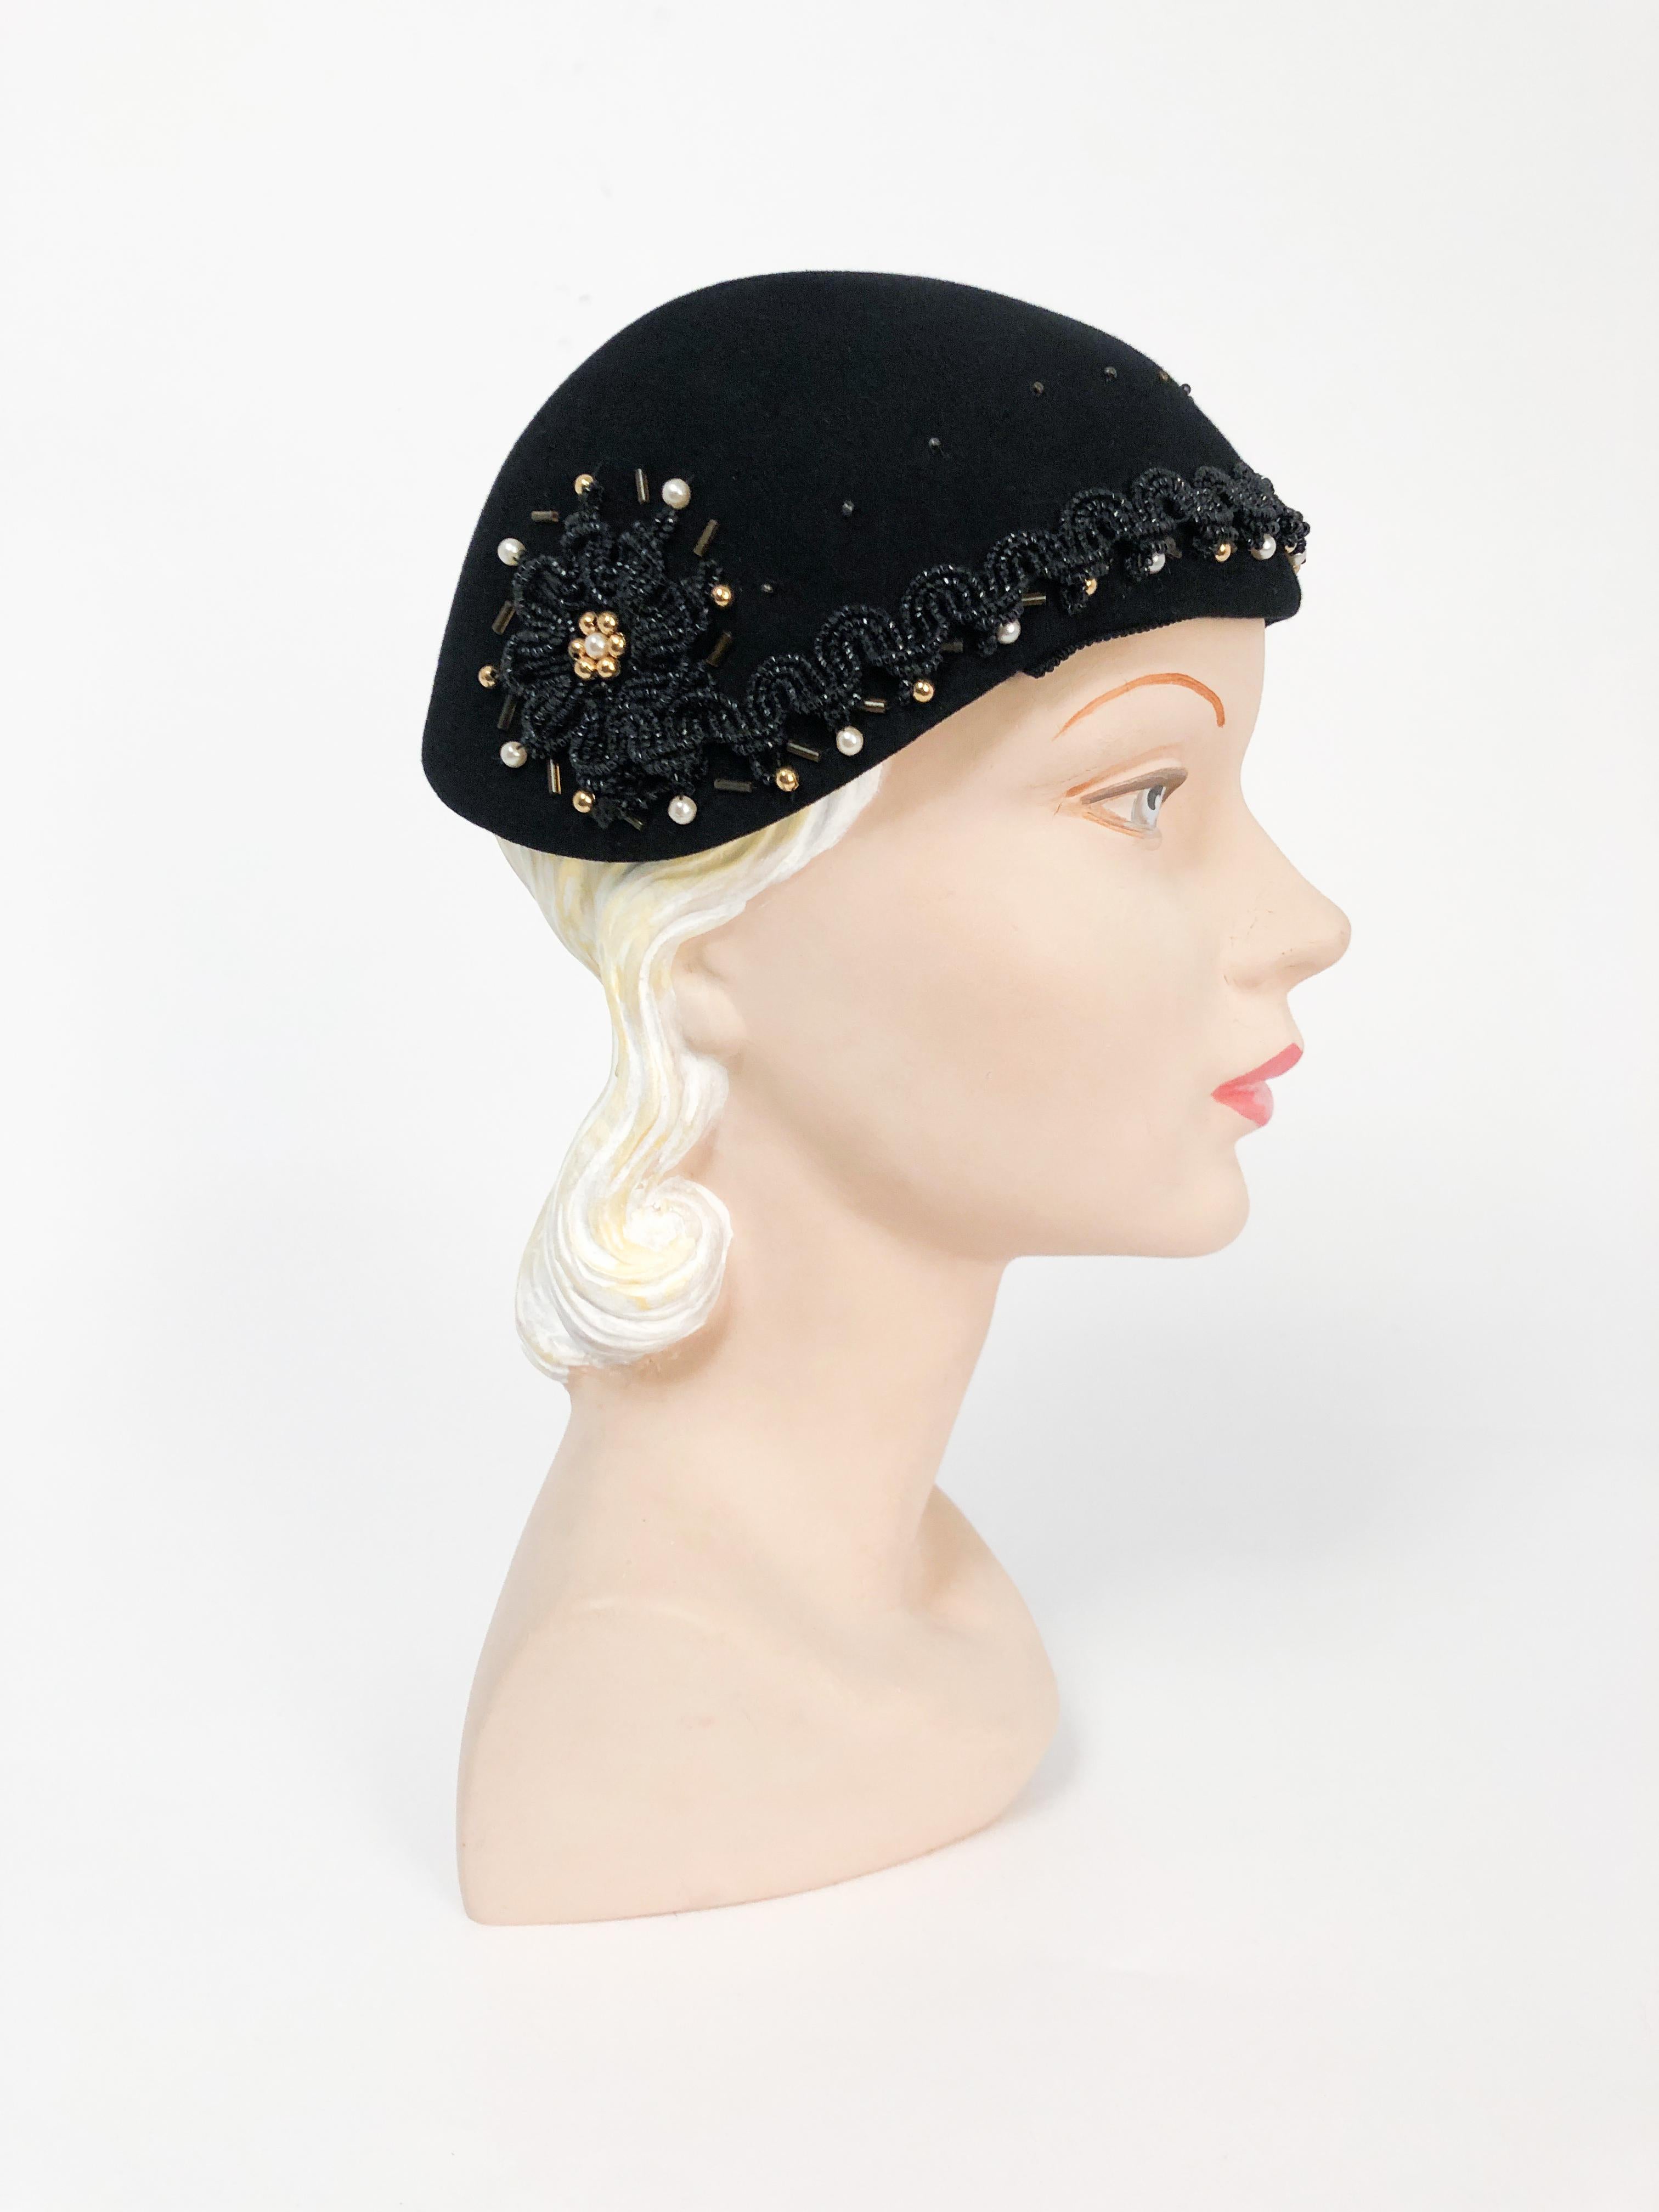 1930s Black Fur Felt Skull Cap with hand Beadwork in black gold and pearl design.